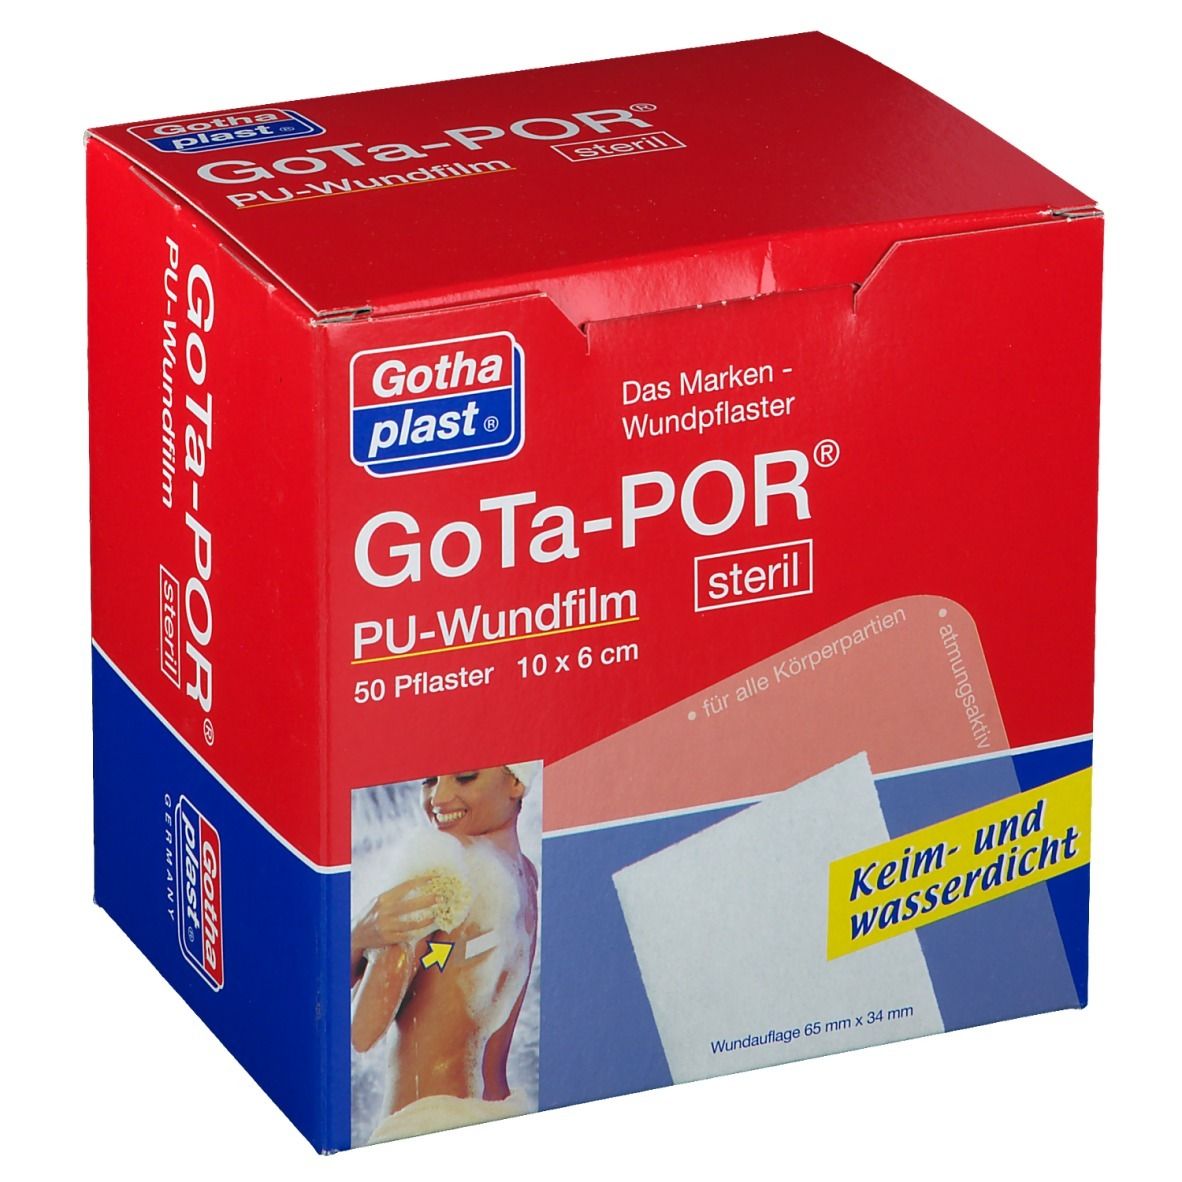 GoTa-POR® PU-Wundfilm steril 10 x 6 cm